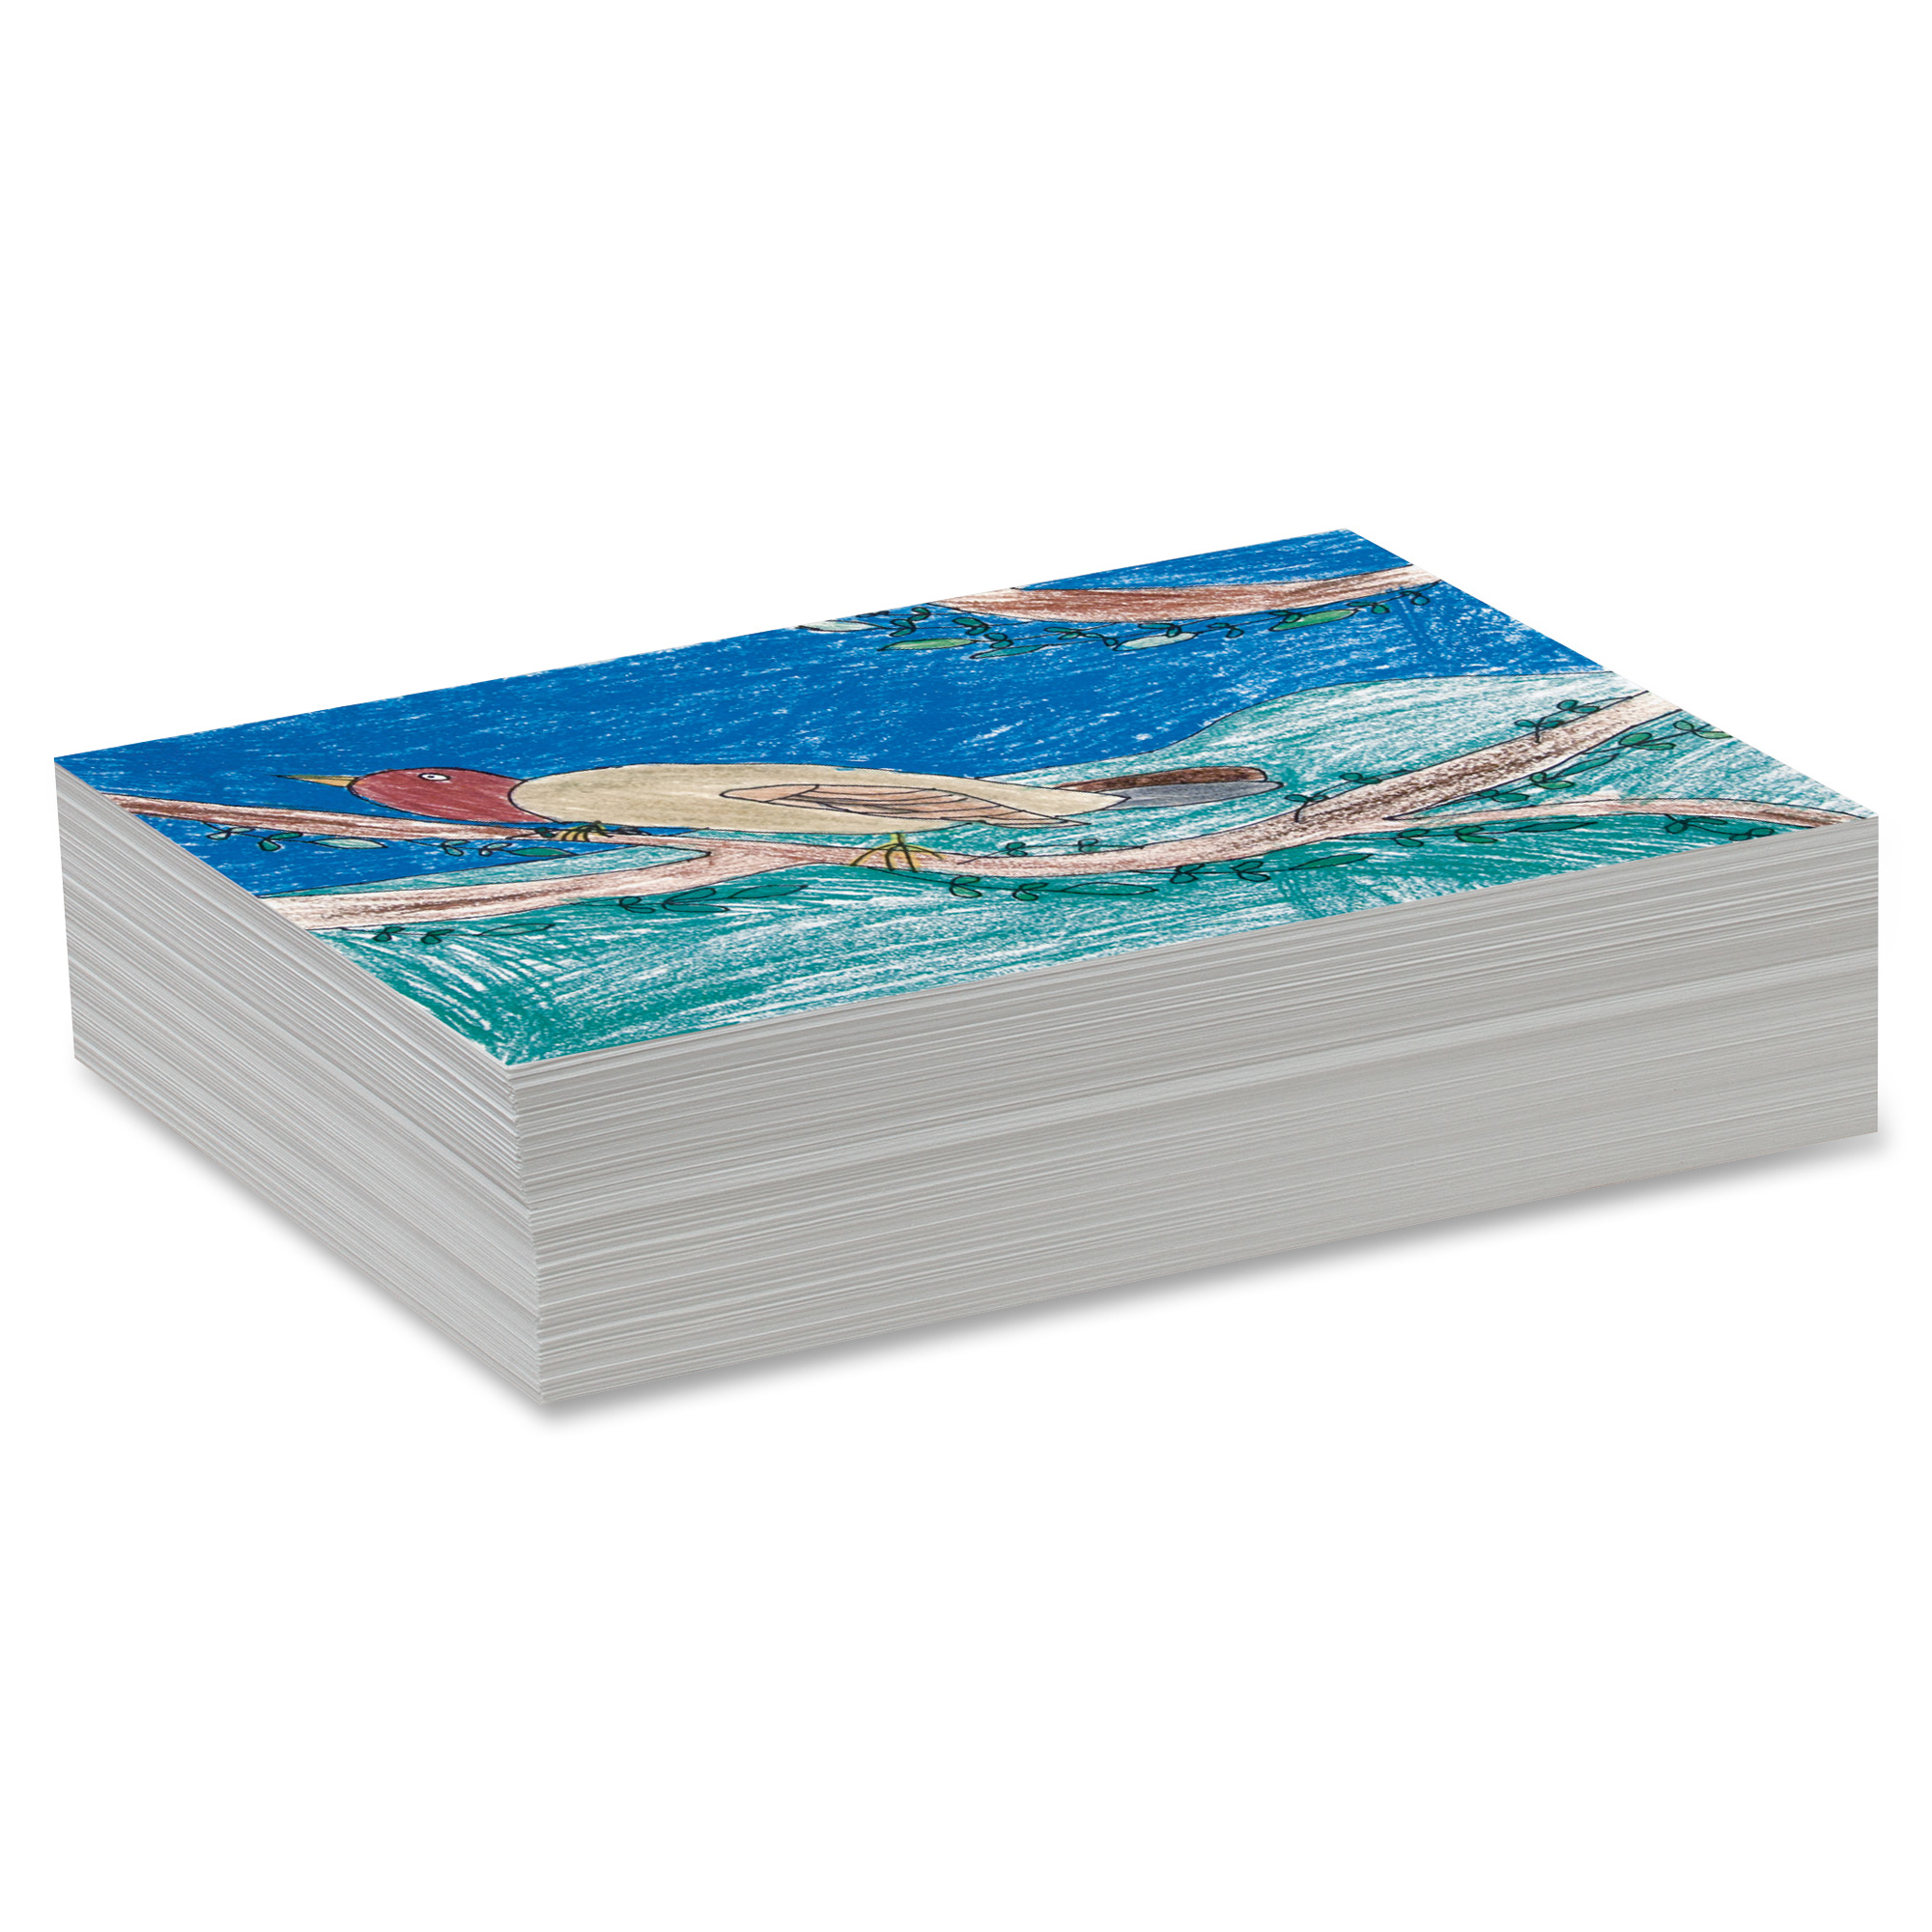 Clearprint Design Vellum Paper 16lb White 8-1/2 x 11 50 Sheets/Pad